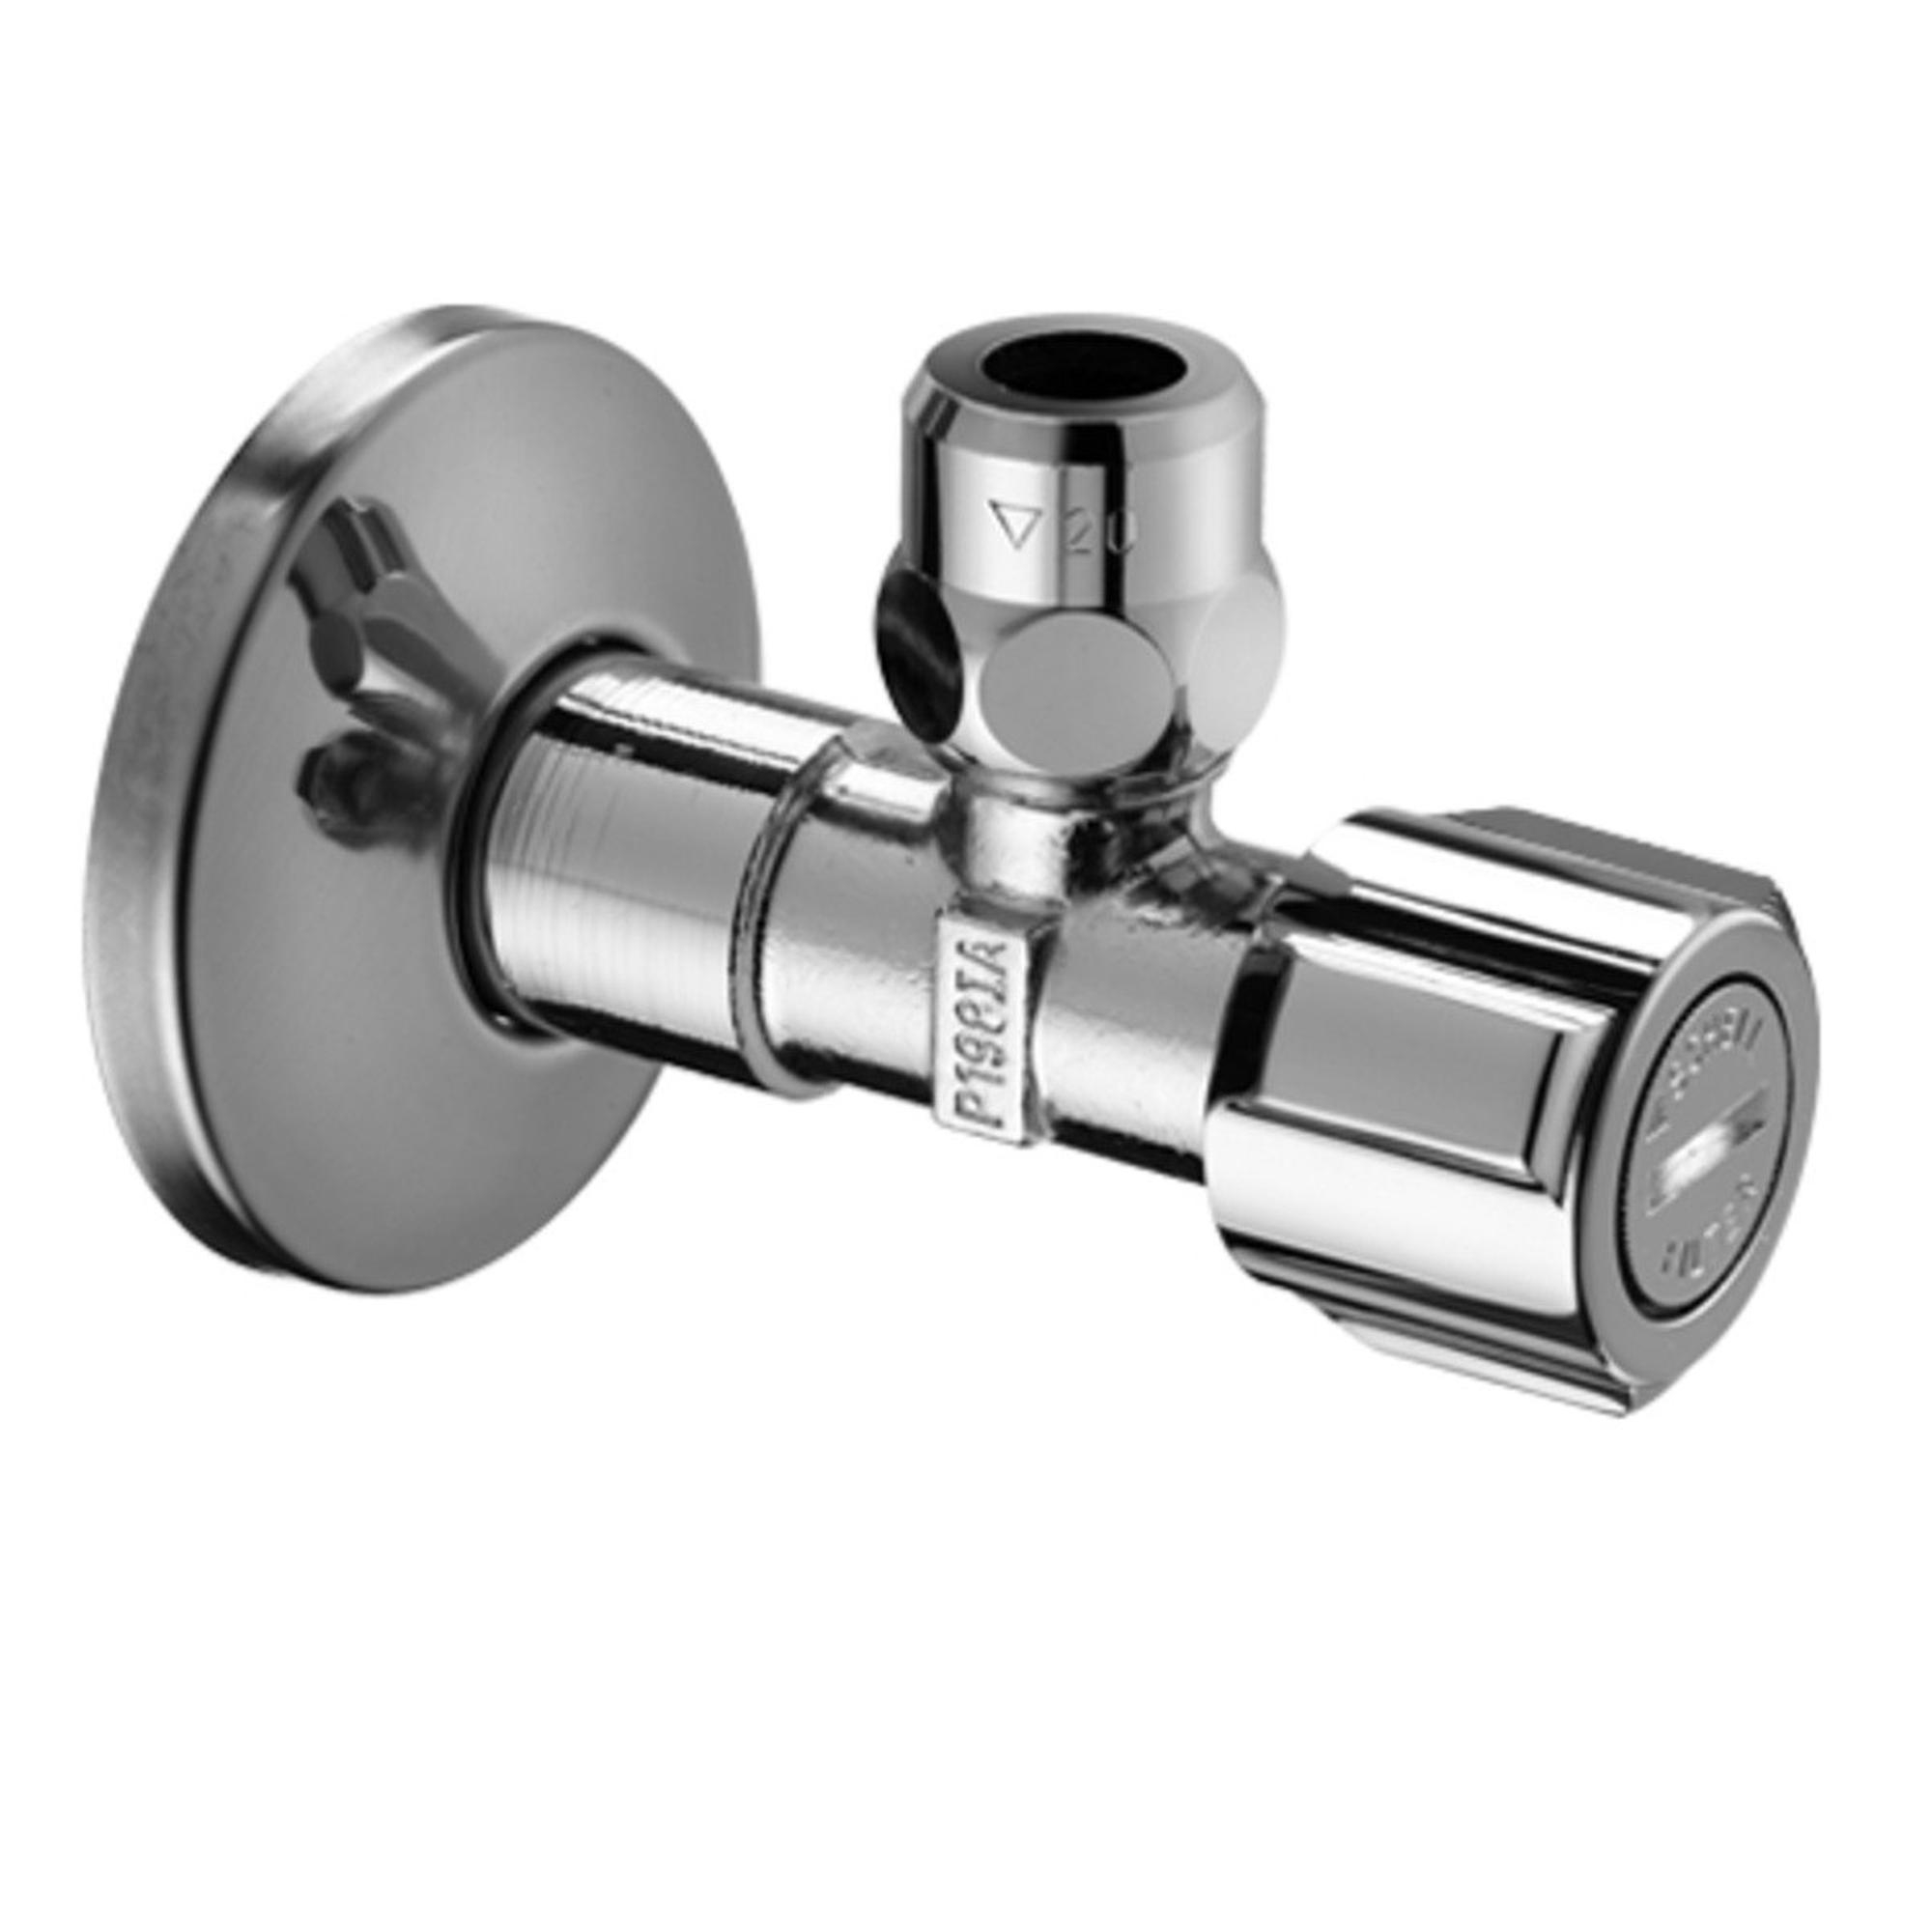 https://static.rorix.nl/image/product/galvano/2000x2000/D130001001371372.jpg/schell-comfort-robinet-d-equerre-avec-filtre-1-2-sw210124.jpg